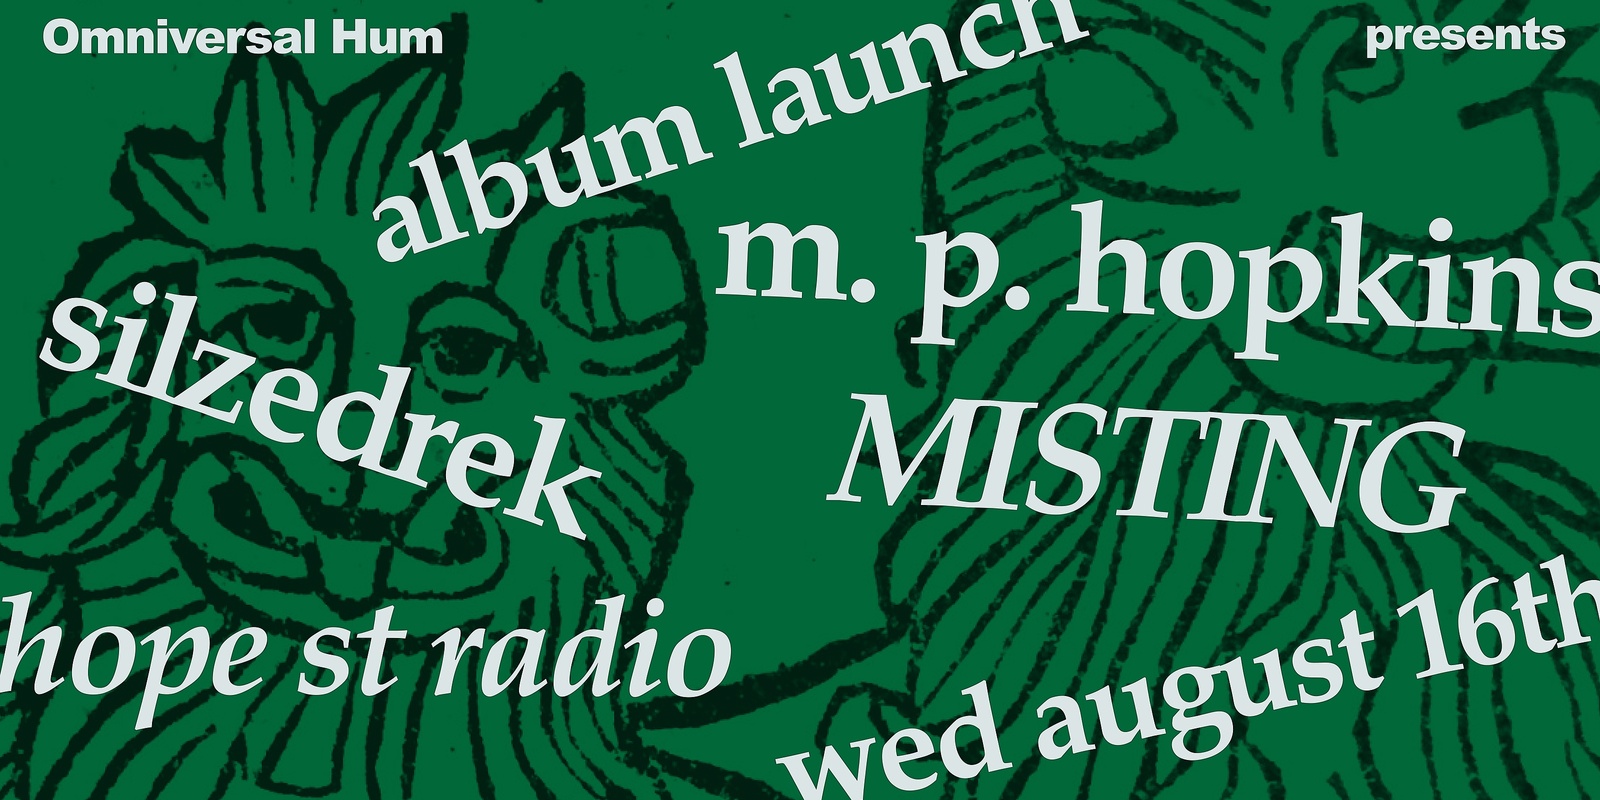 Banner image for Omniversal Hum: MP Hopkins "Misting" album launch + Silzedrek 